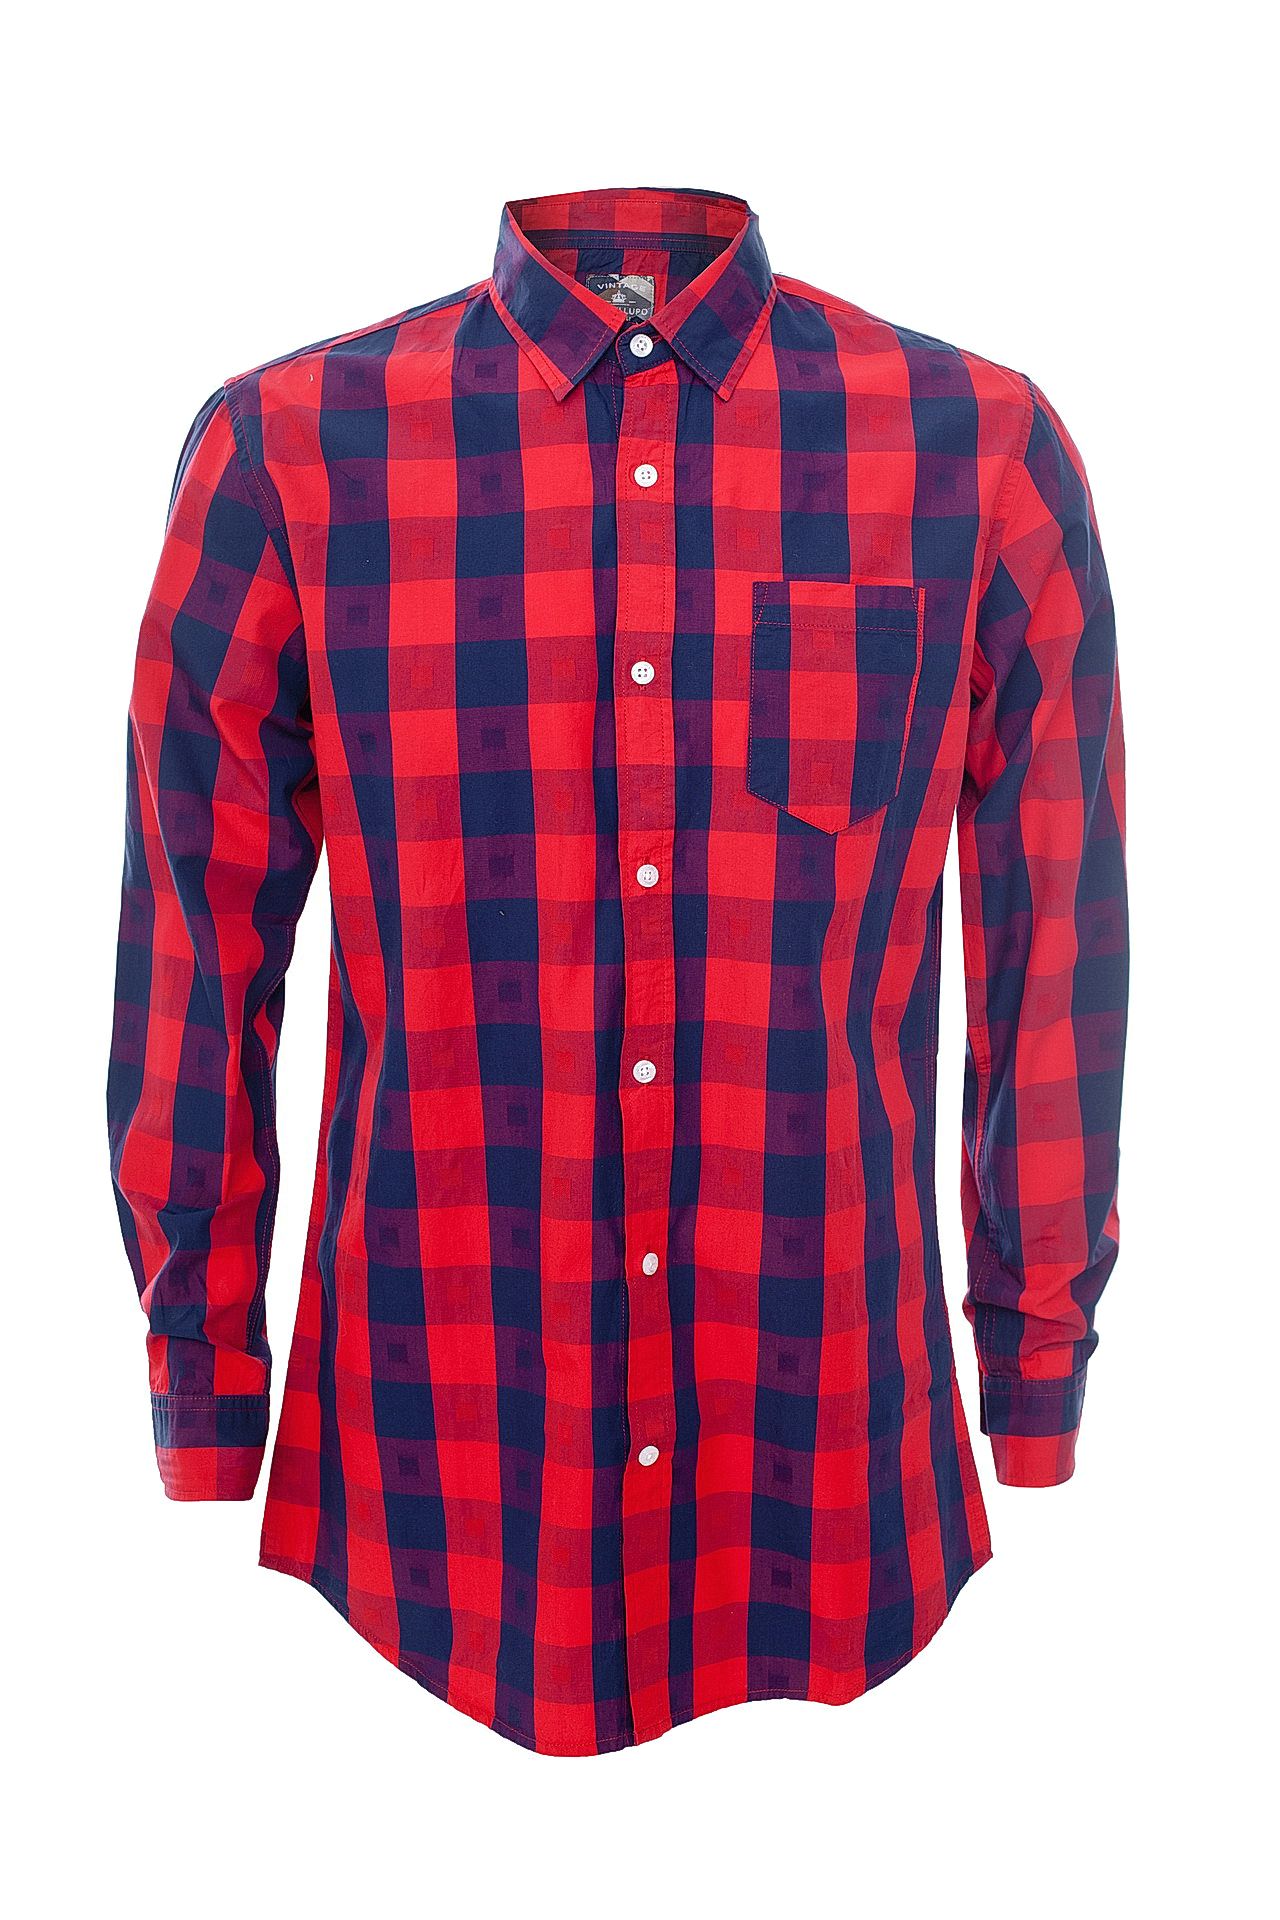 Одежда мужская Рубашка GIANNI LUPO (M108GL/17.2). Купить за 3430 руб.